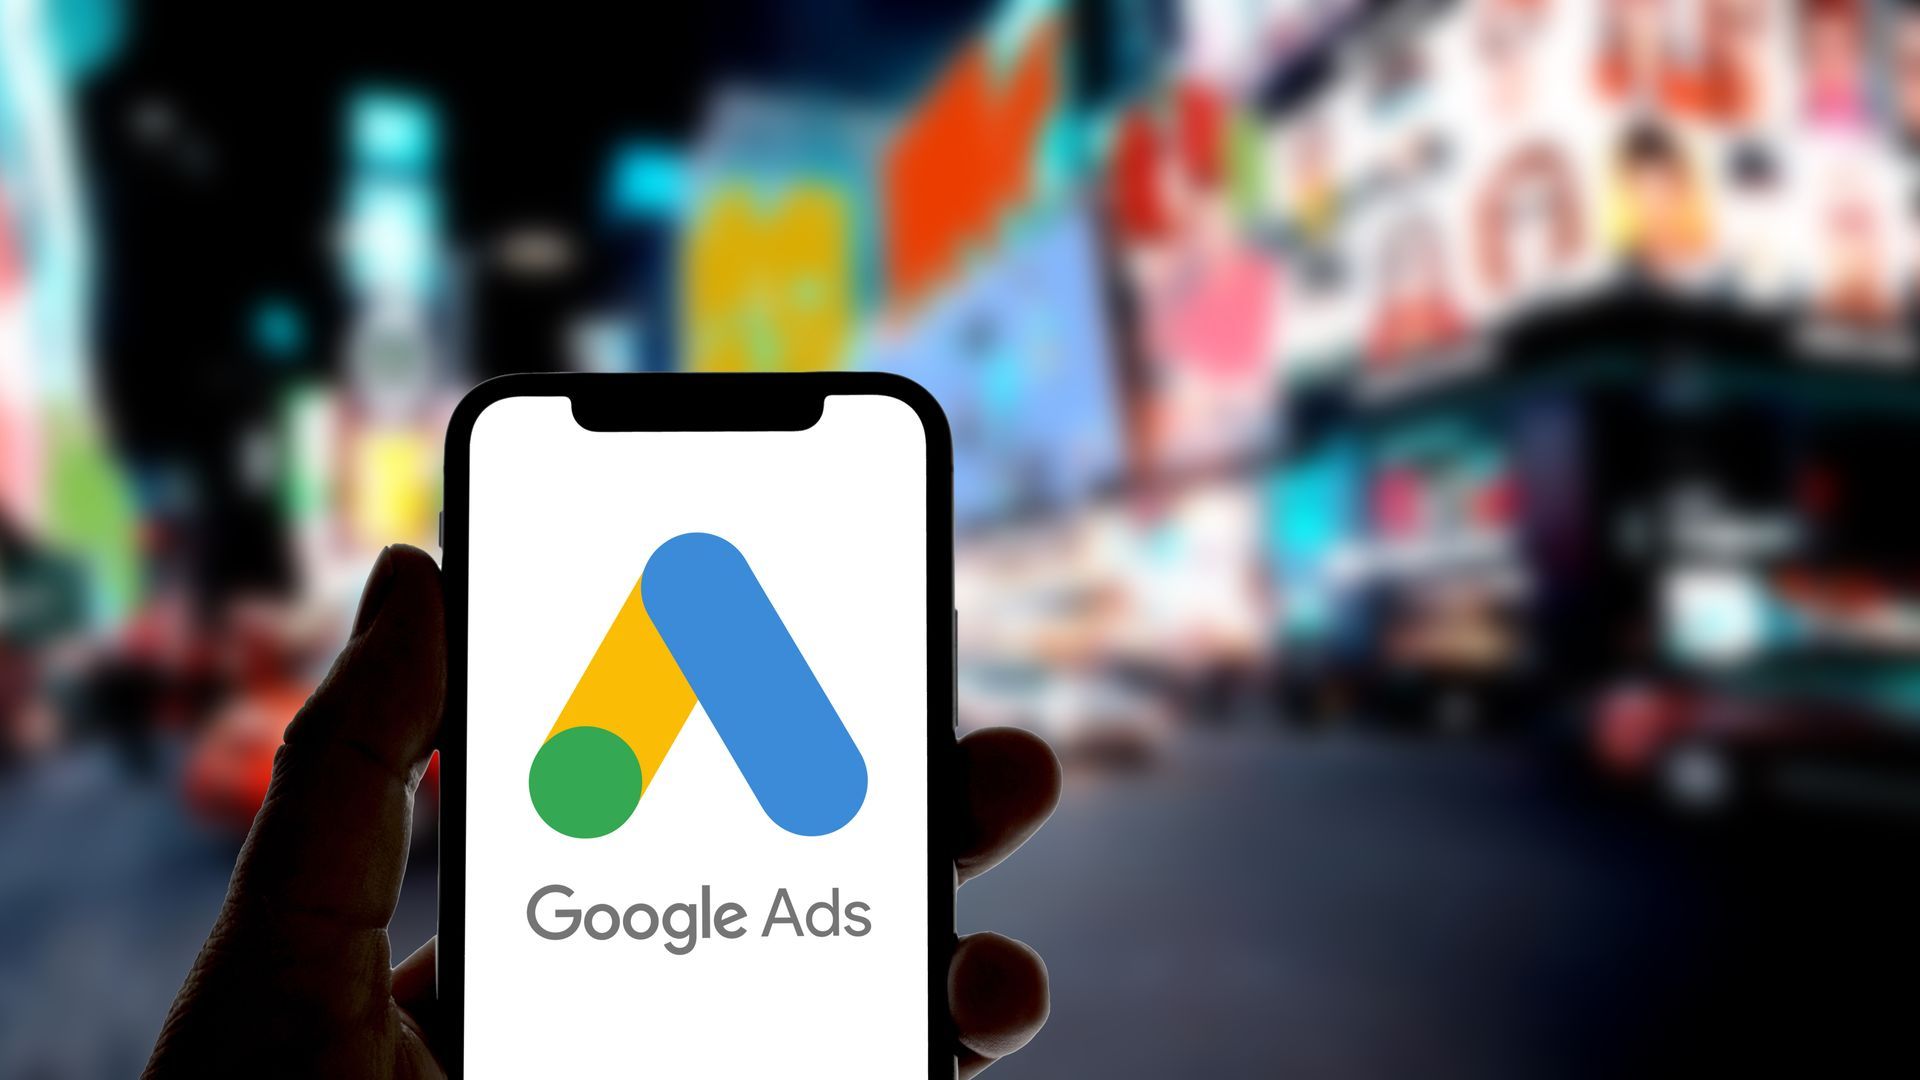 Phone with Google Ads logo